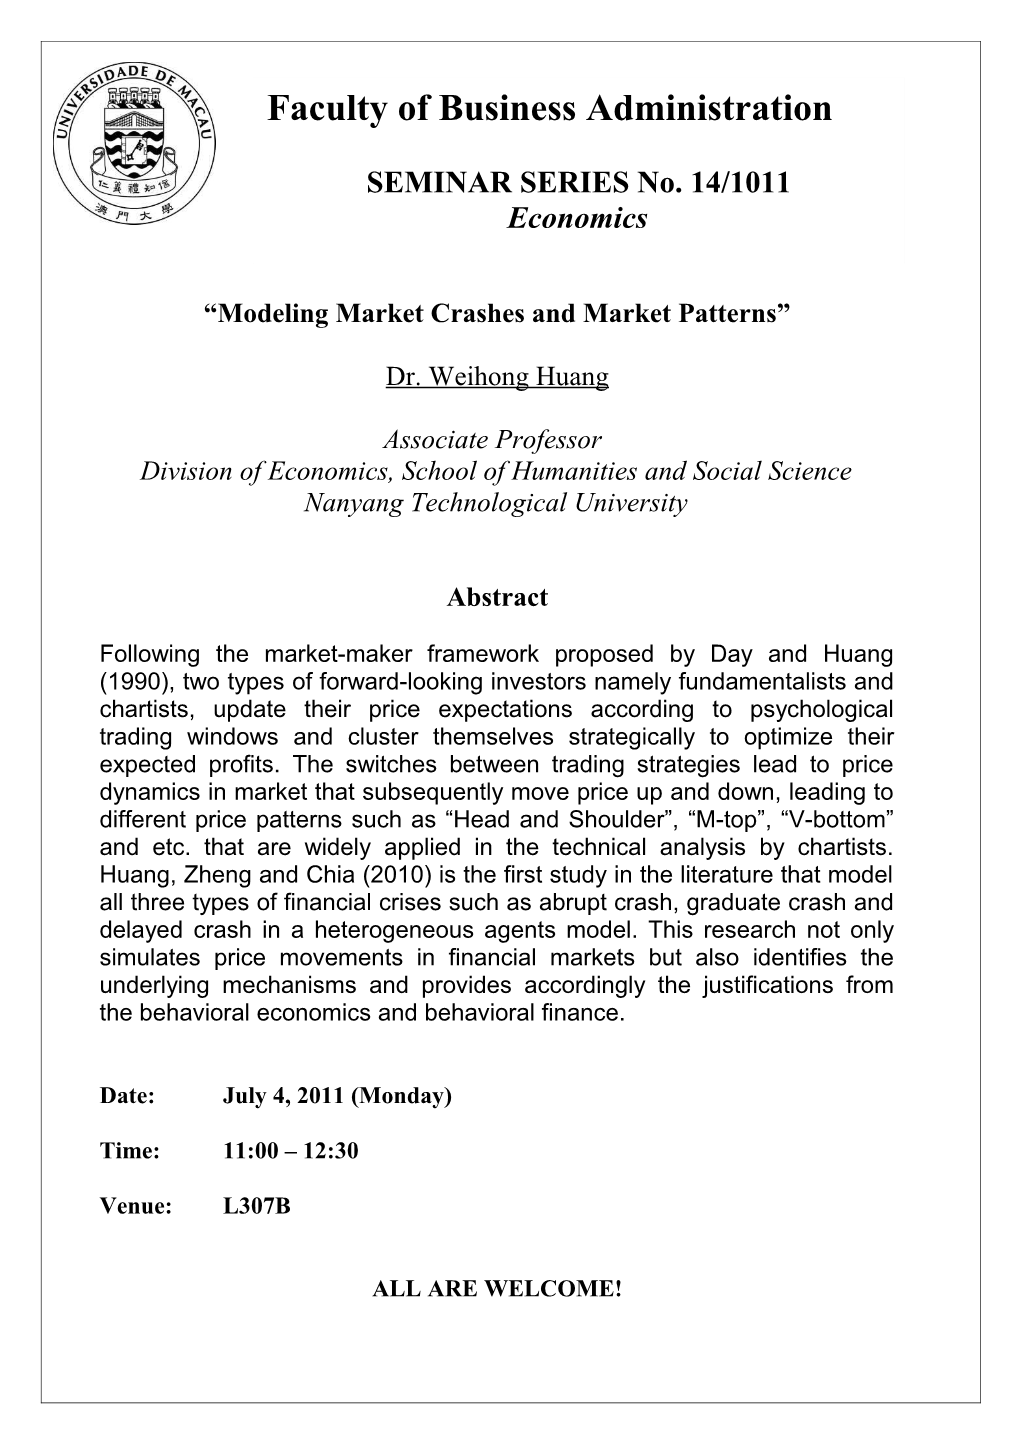 Modeling Market Crashes and Market Patterns